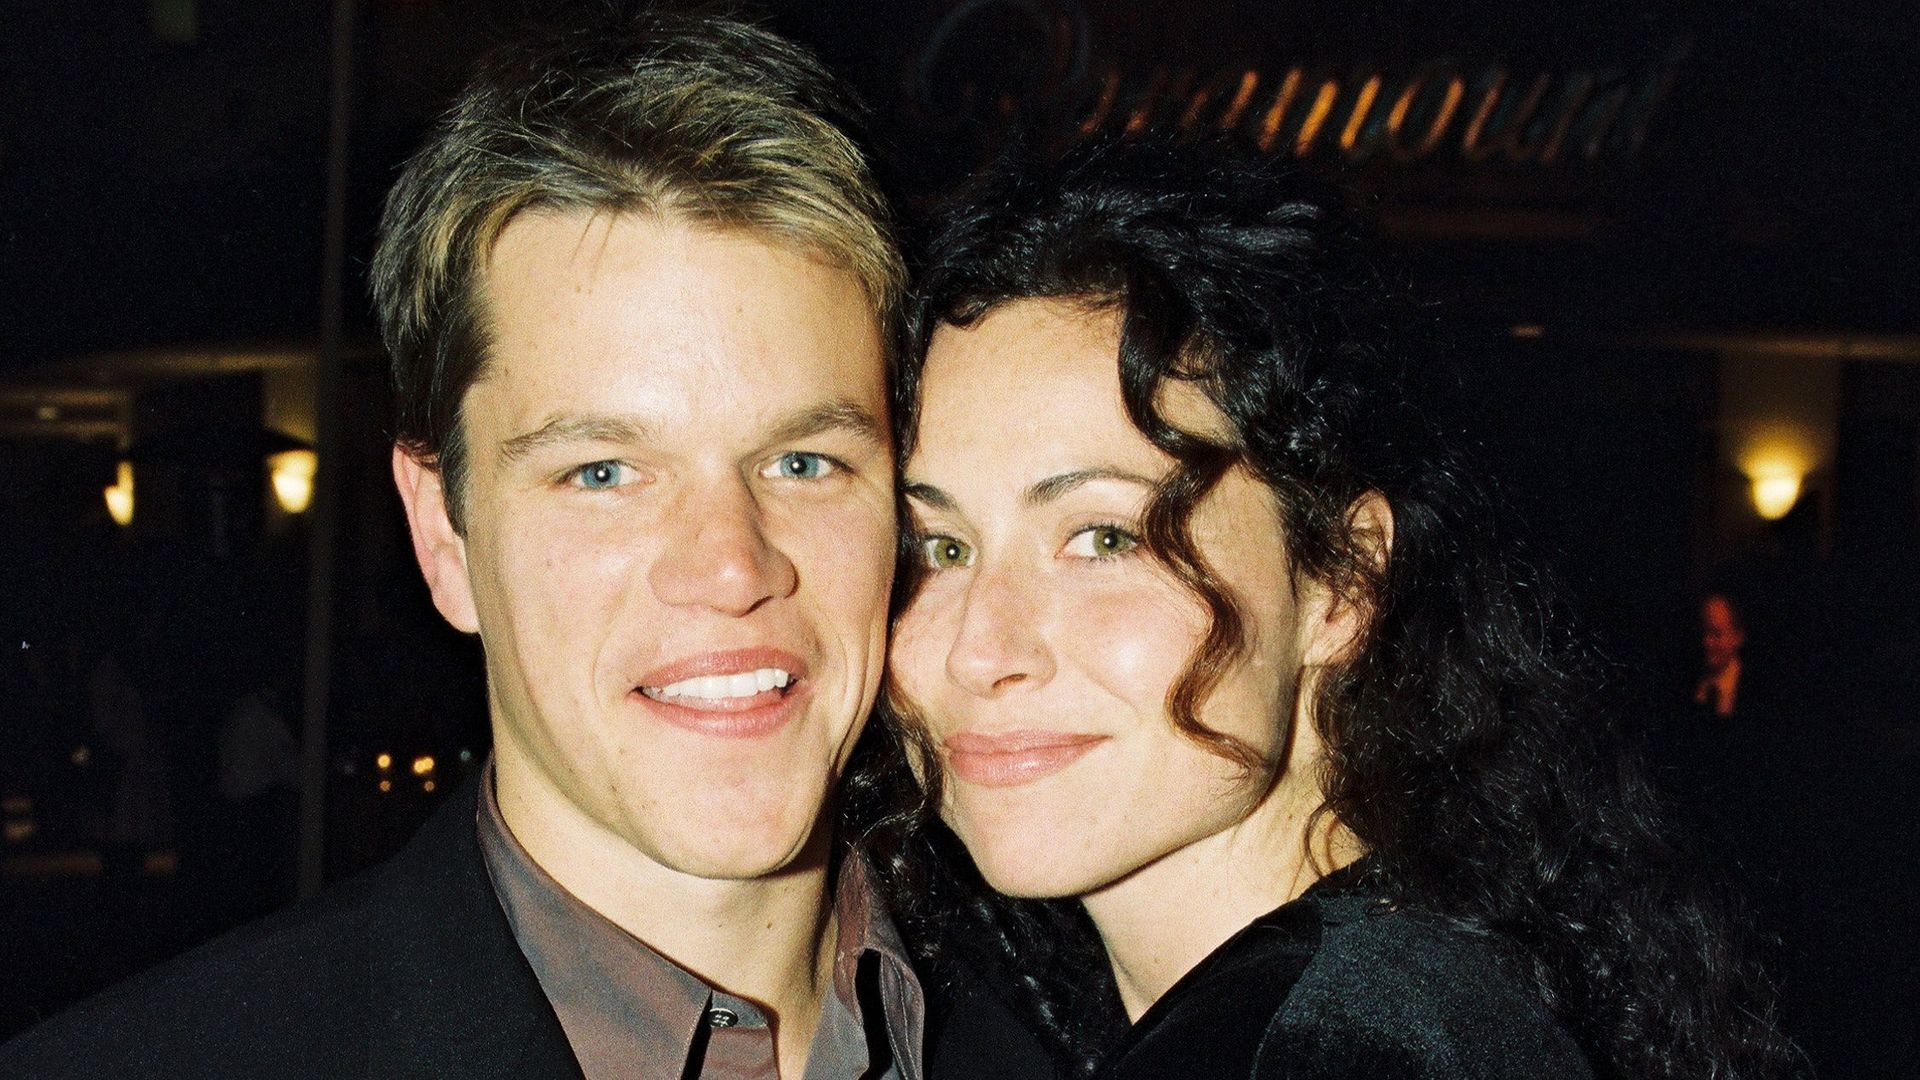 Minnie Driver recalls 'heartbreaking' moment with Matt Damon weeks after public breakup